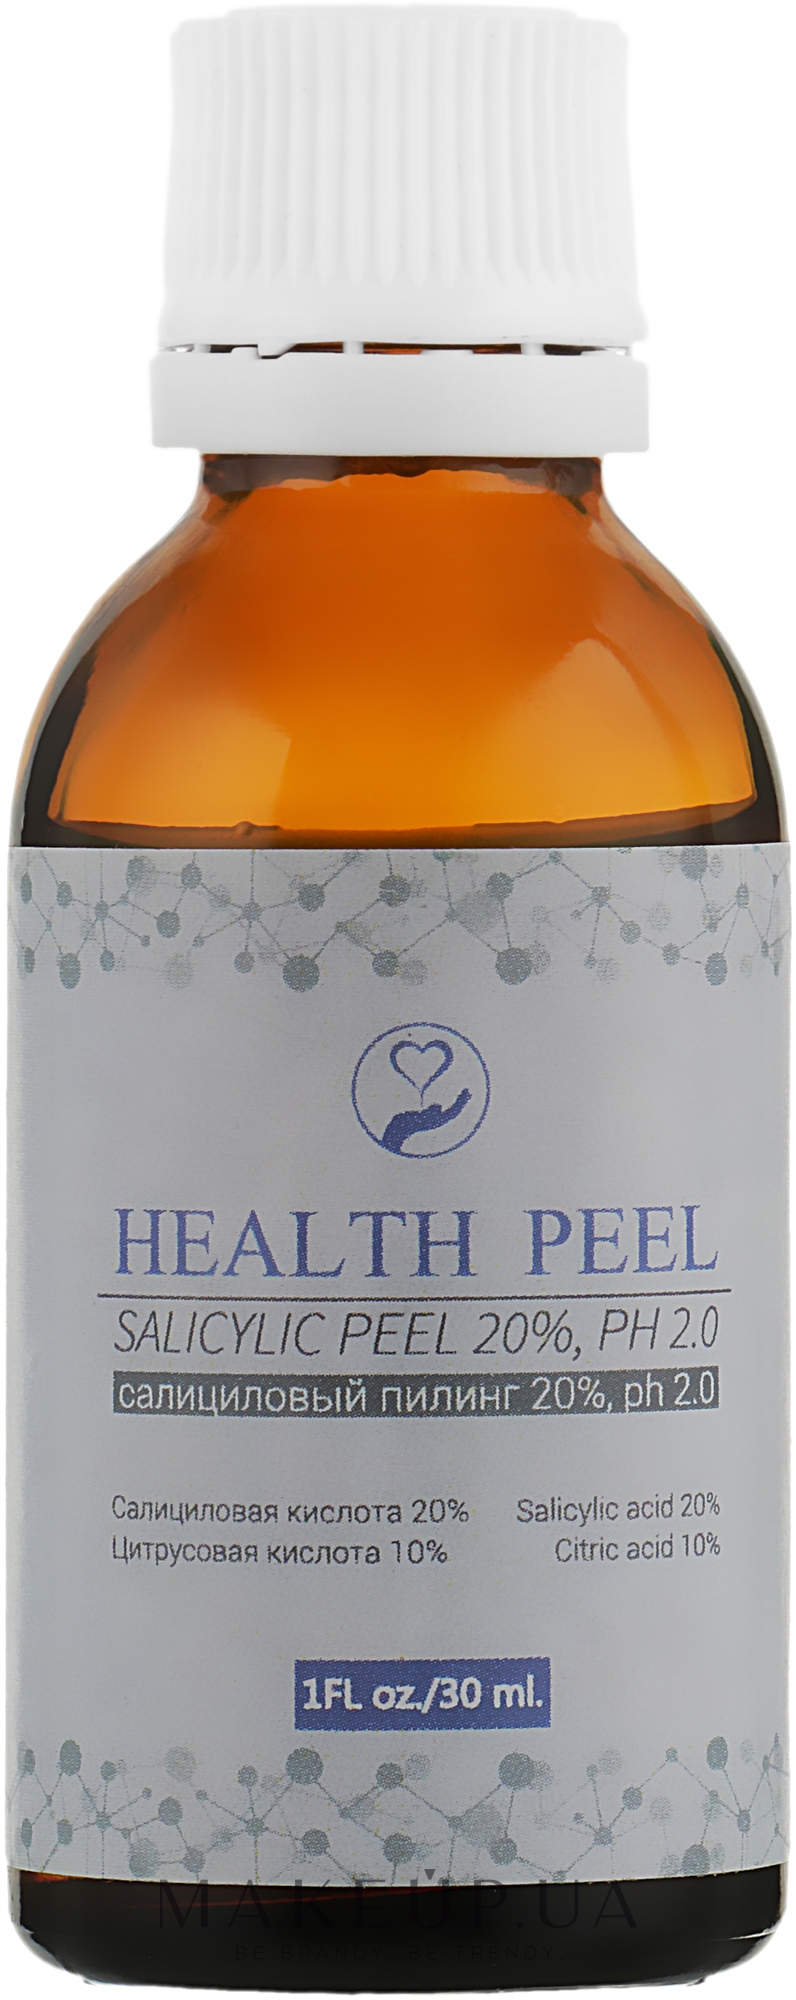 Салициловый пилинг 20 % - Health Peel Salycilic Peel, pH 2.0 — фото 30ml